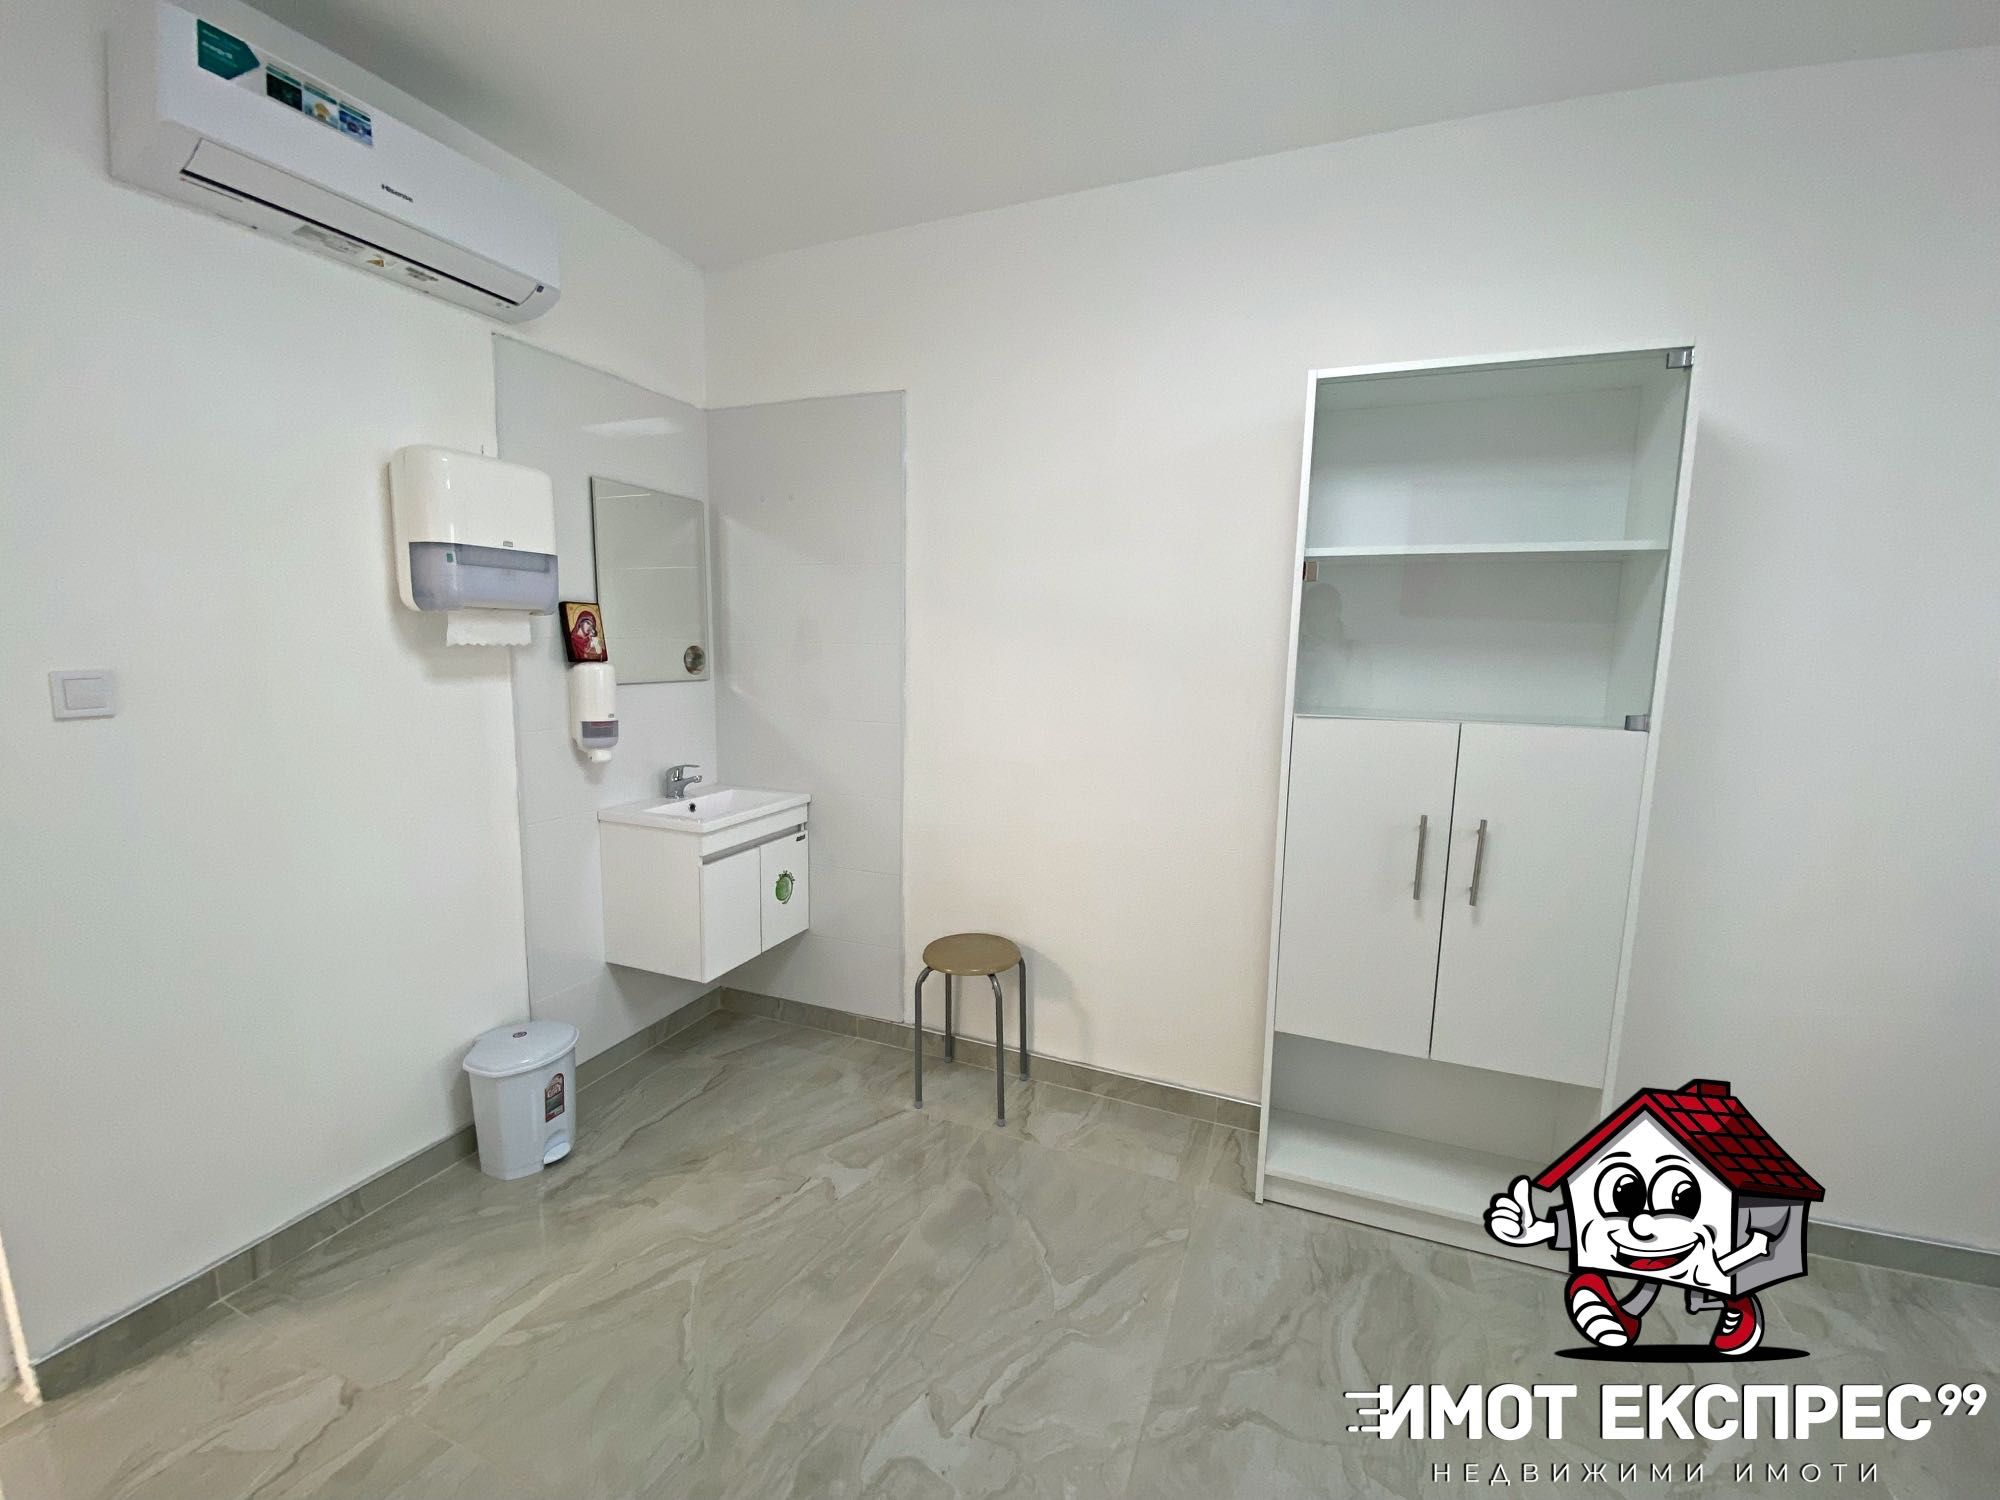 Лекарски кабинети под наем, обзаведени и оборудвани, нови, Асеновград